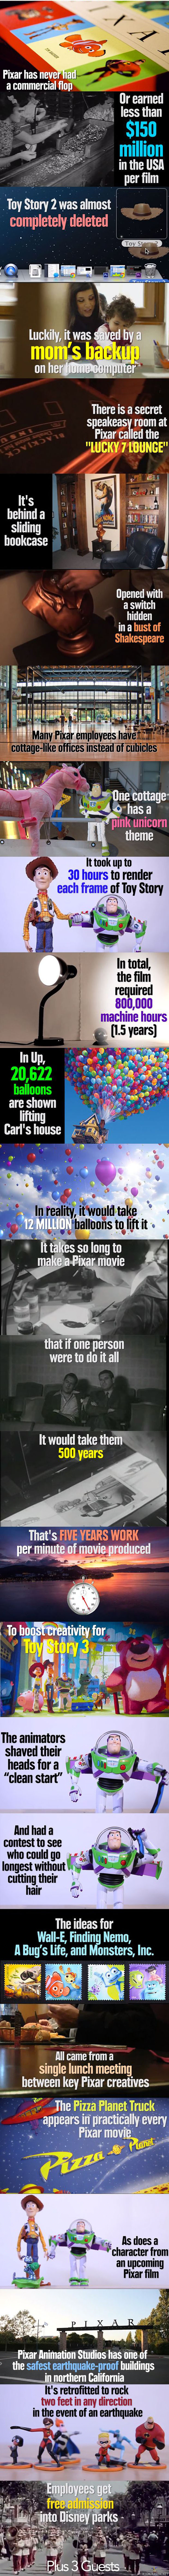 Pixar facts